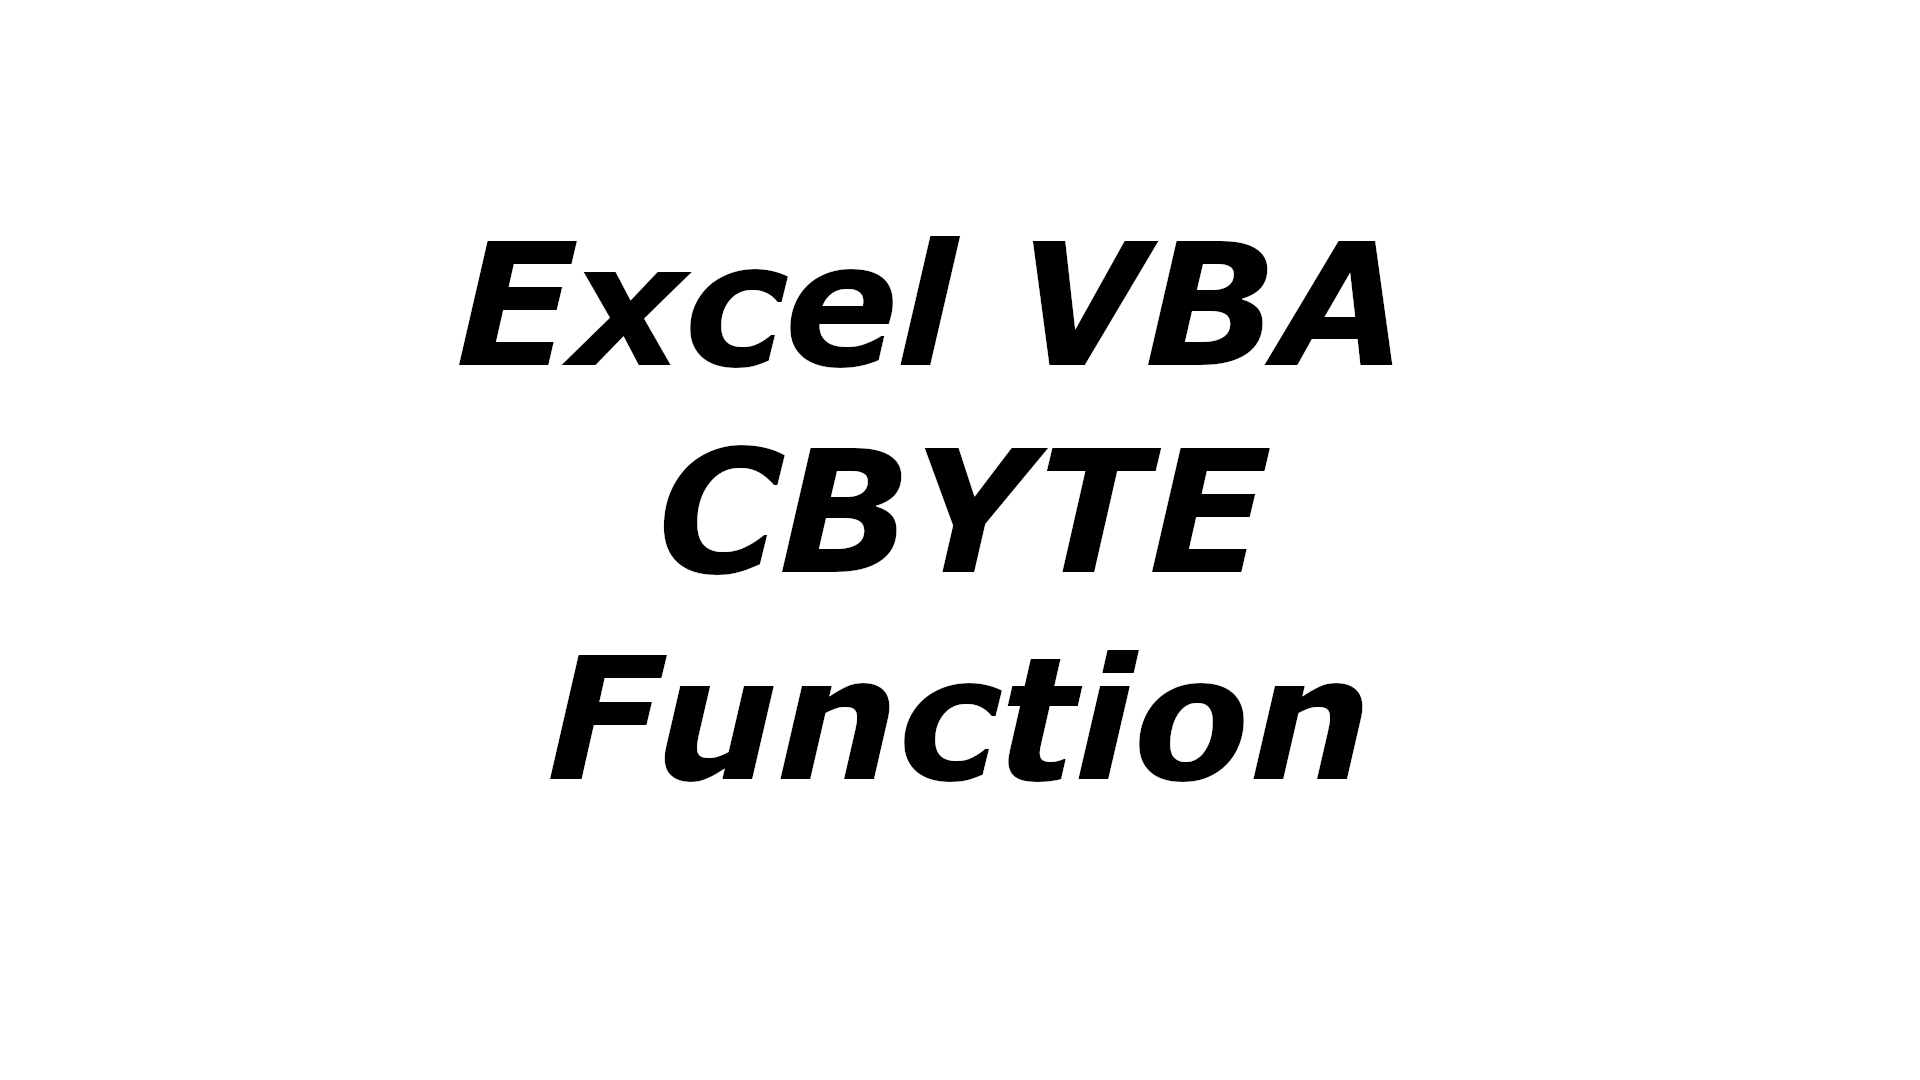 Excel VBA CBYTE function